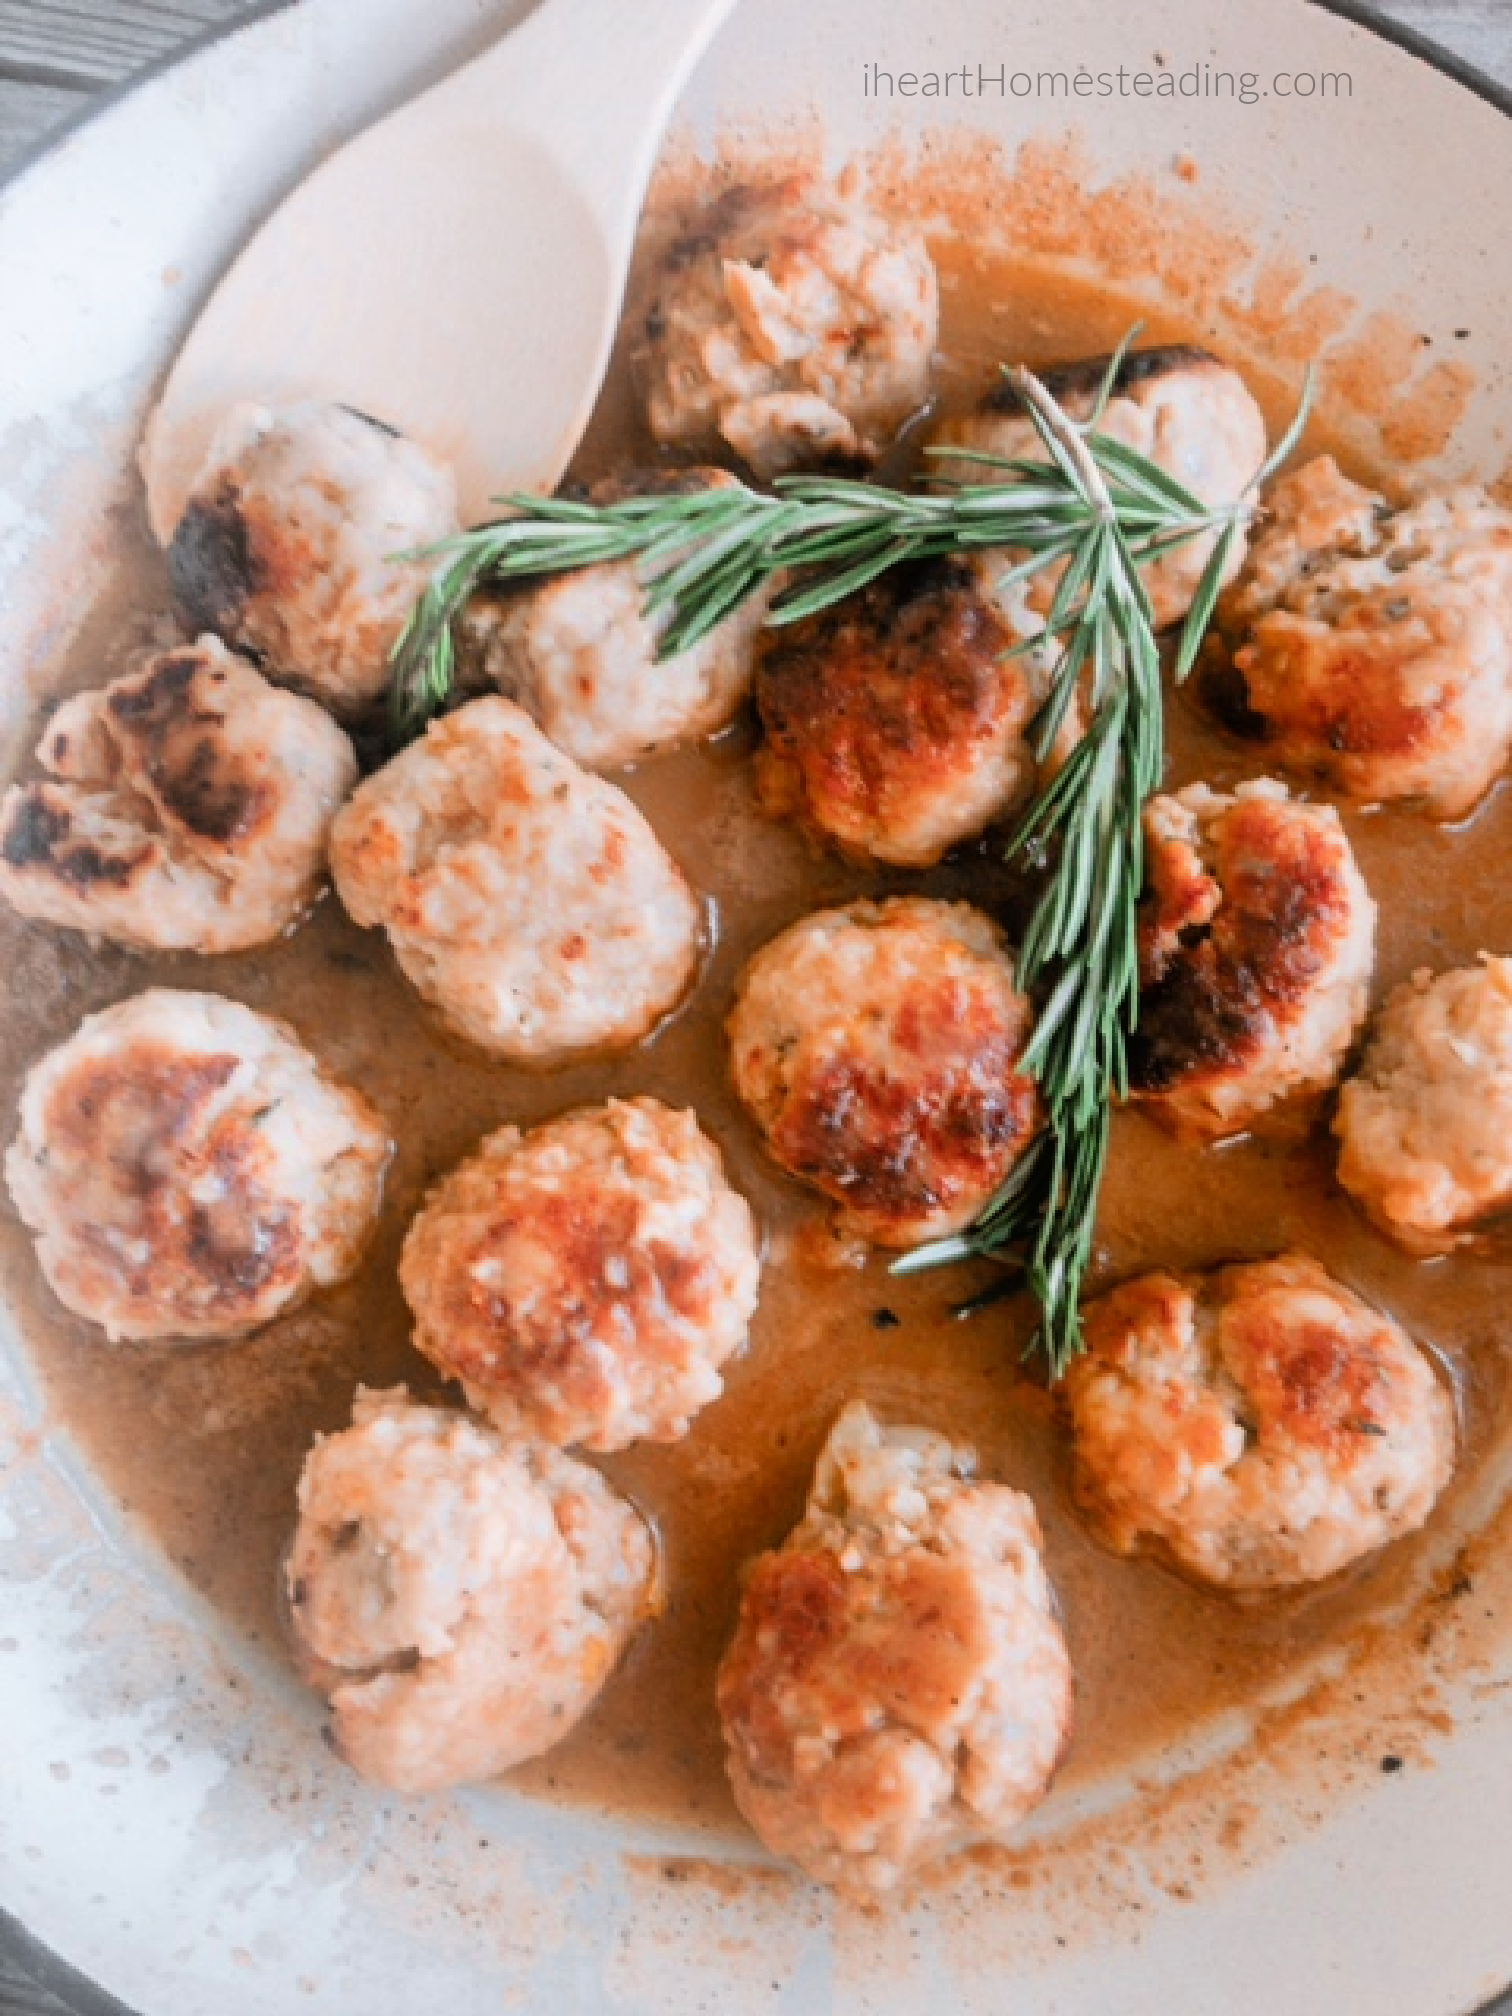 Great freezer meal! | Rosemary Lemon Turkey Meatballs in Gravy- Nod to Swedish meatballs